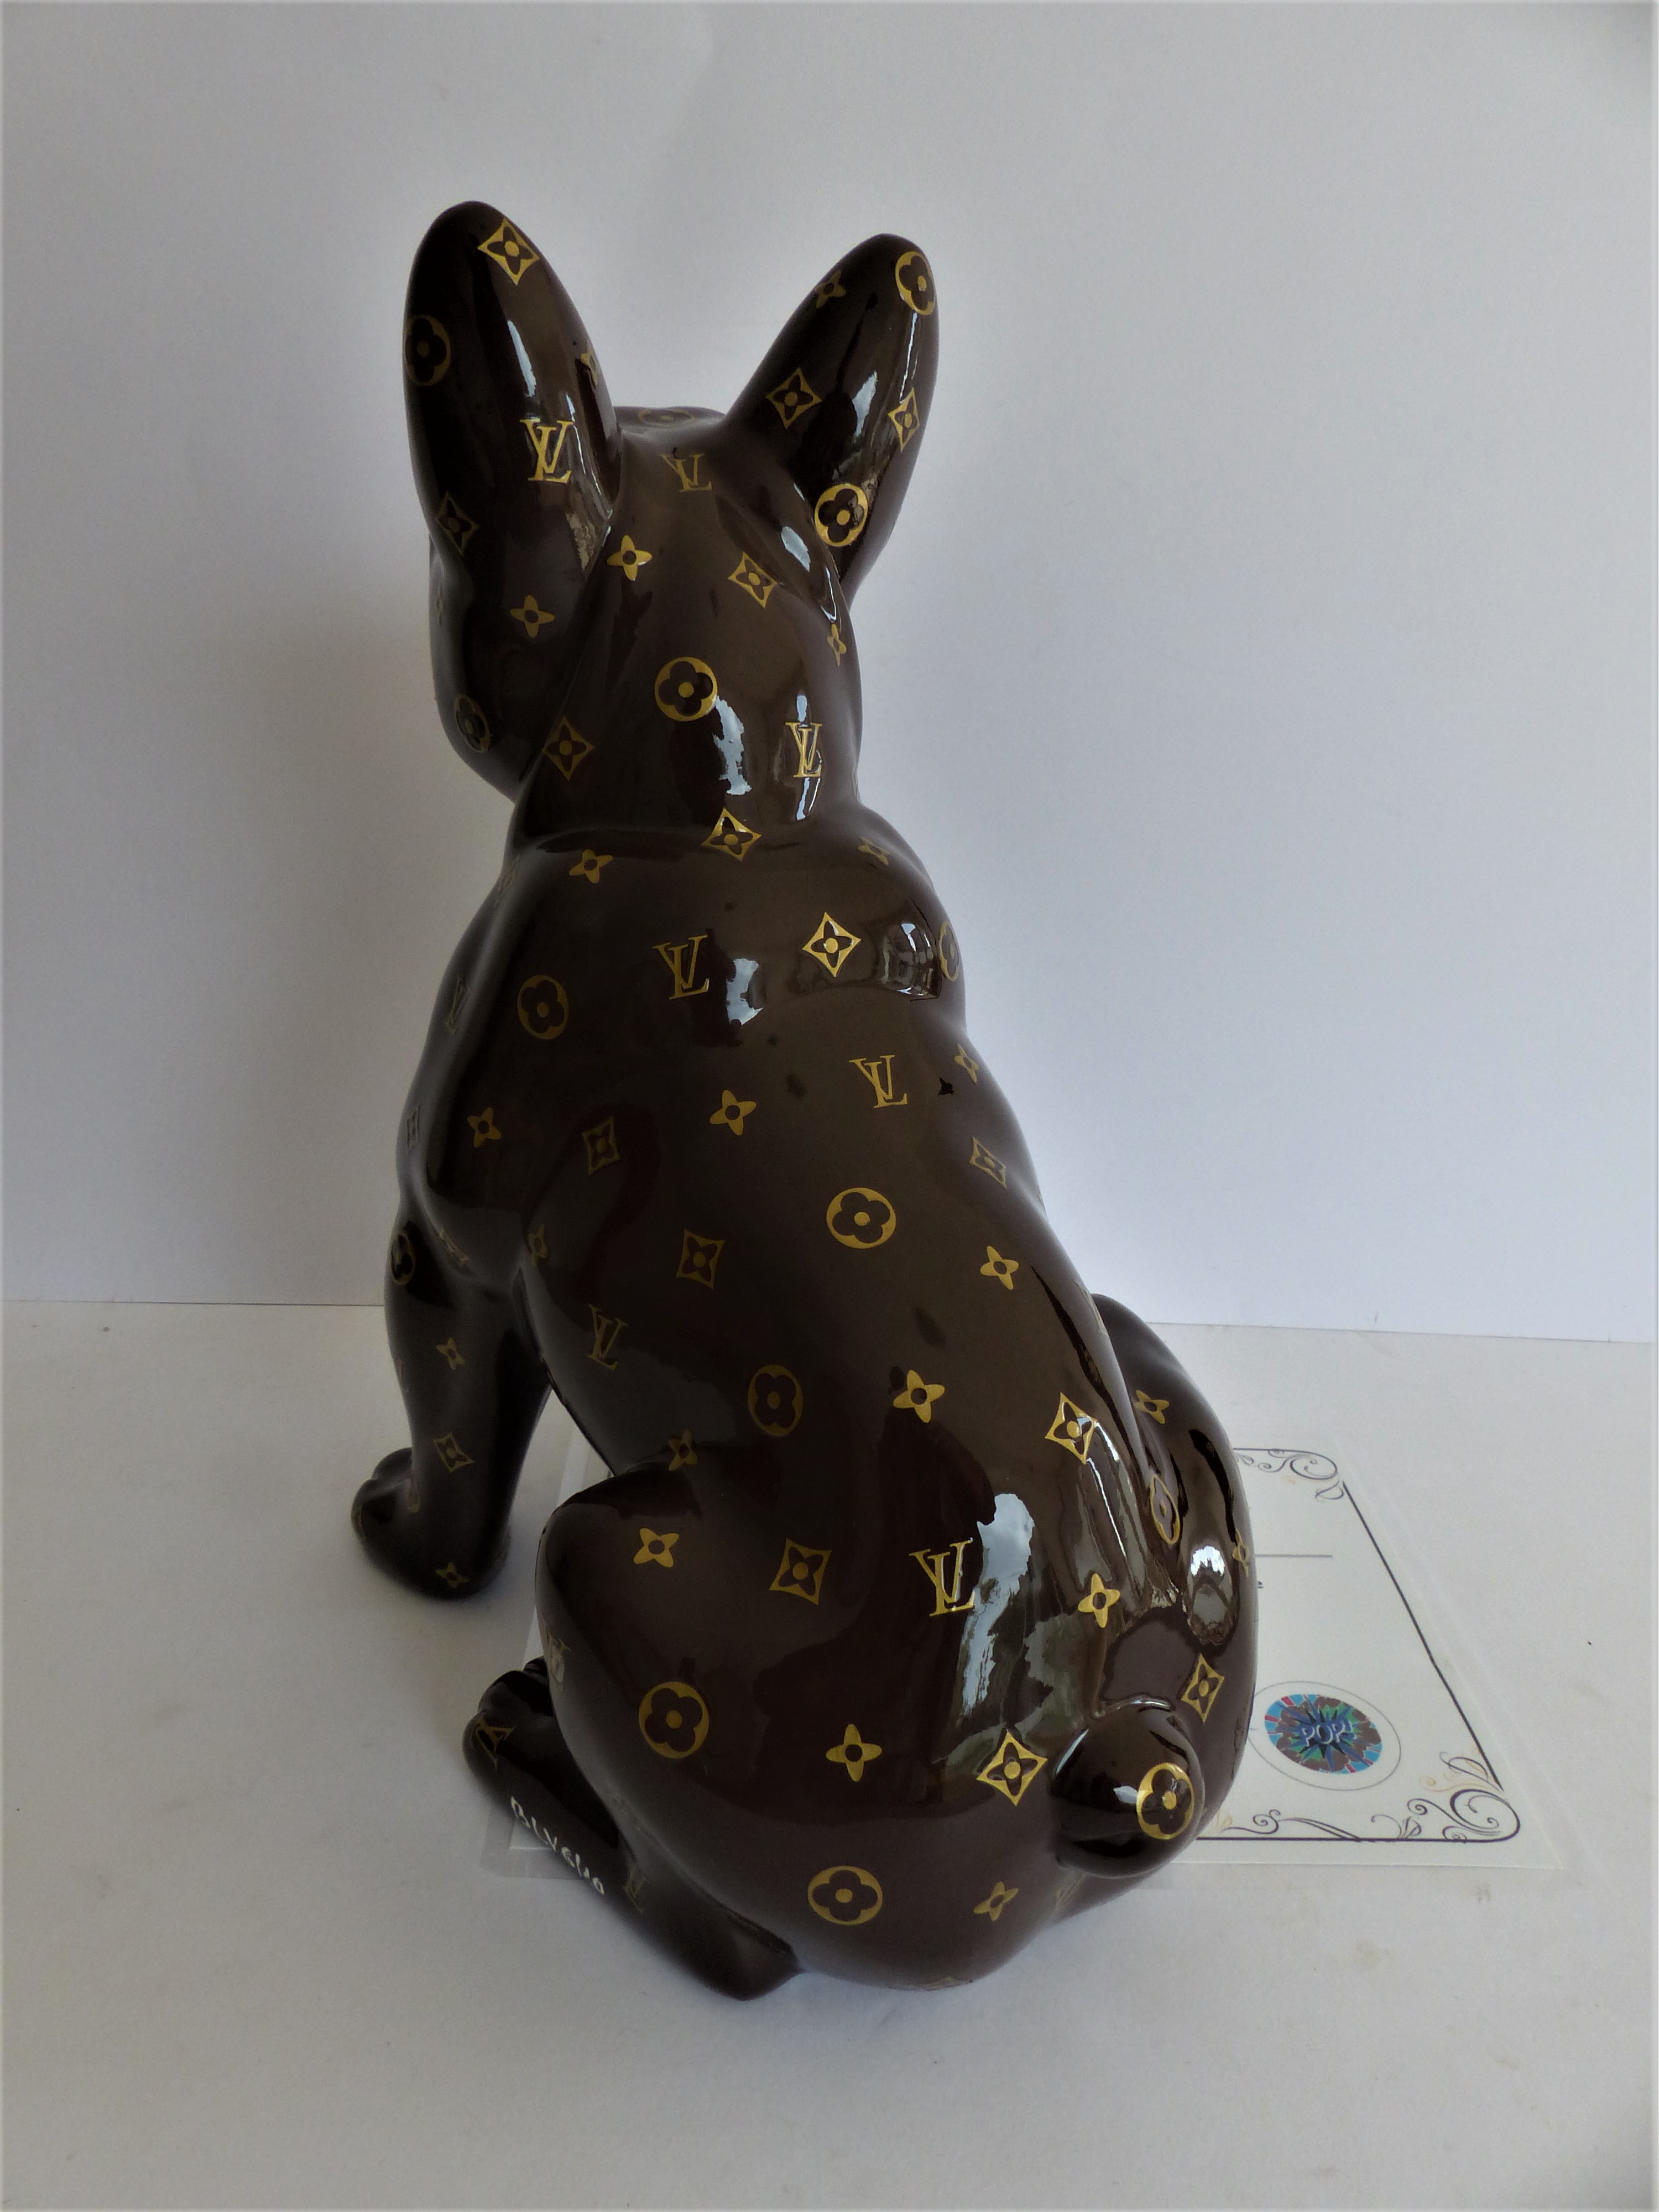 Sculpture Bulldog Pee Louis Vuitton Pop , Sculpture by Priscilla